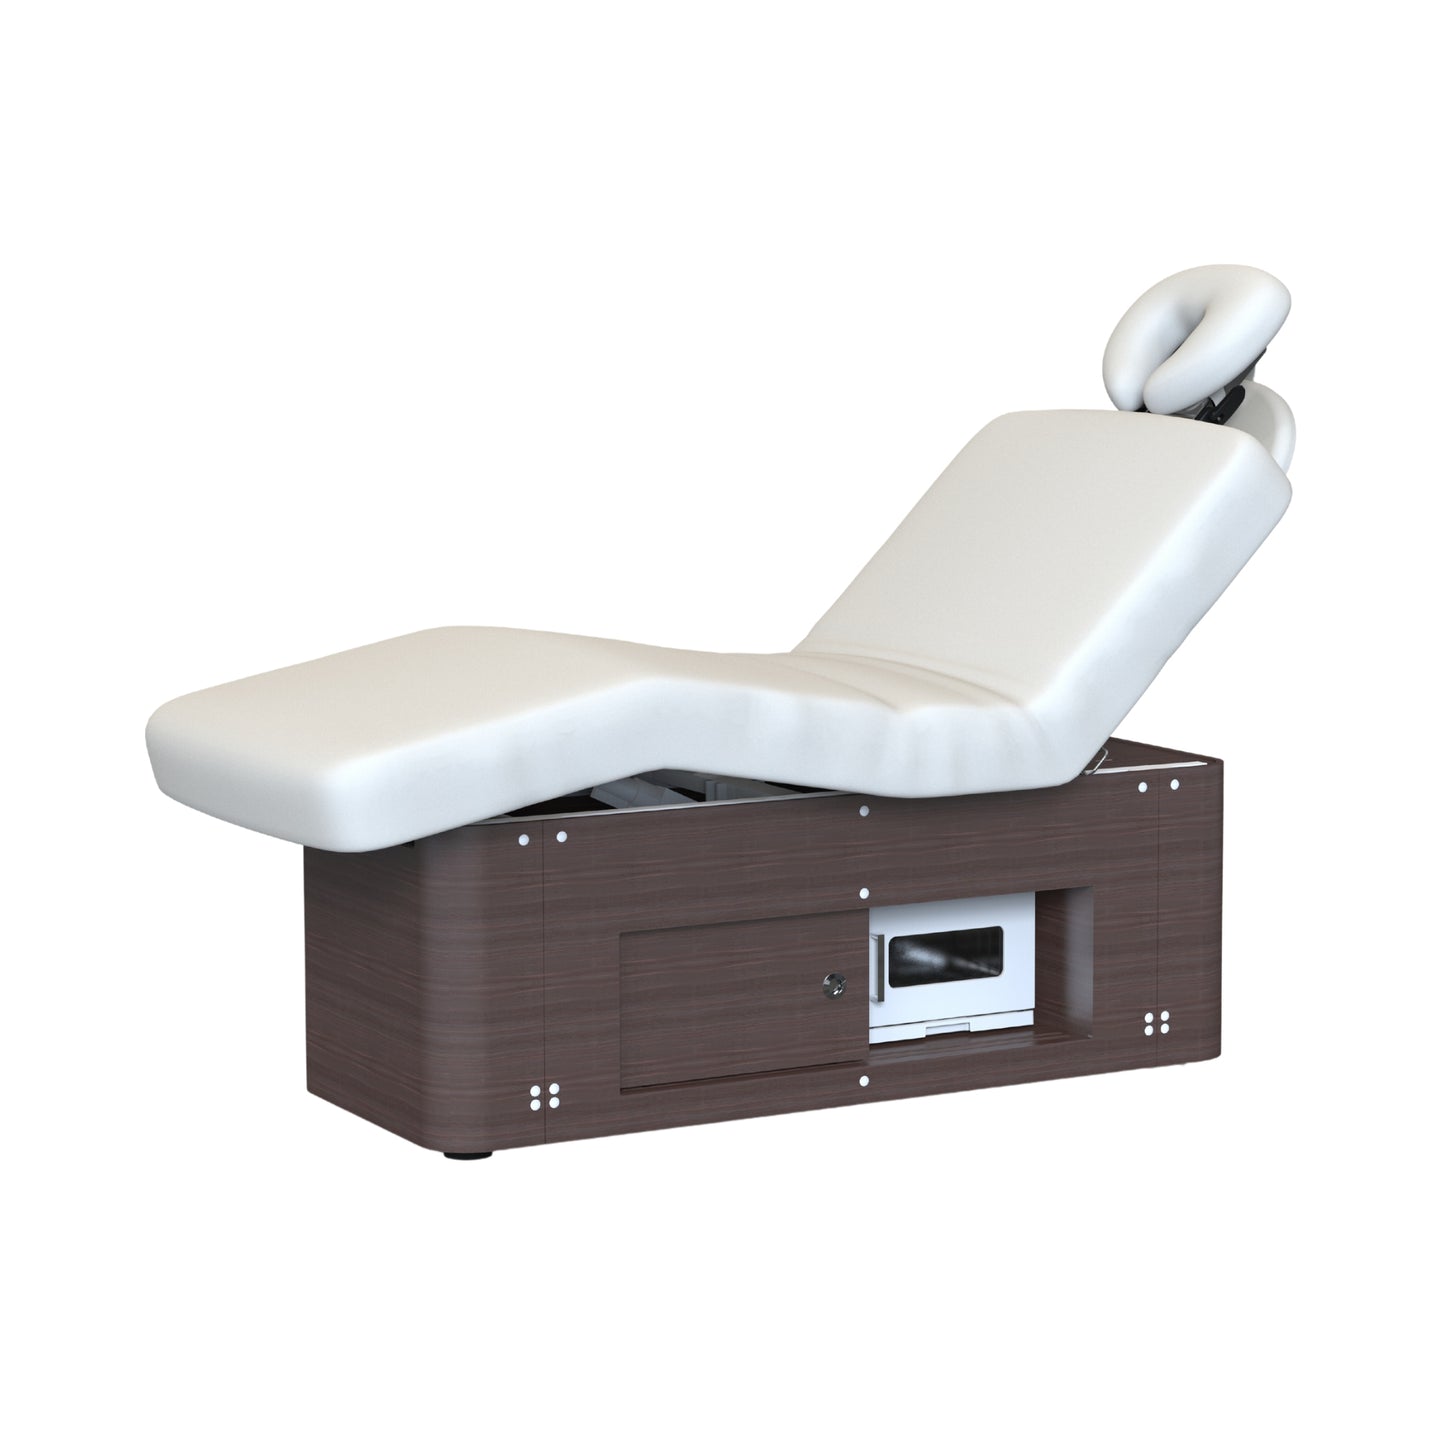 SoftSerene Massage Table - Silverfox 2285 - Sitting Position